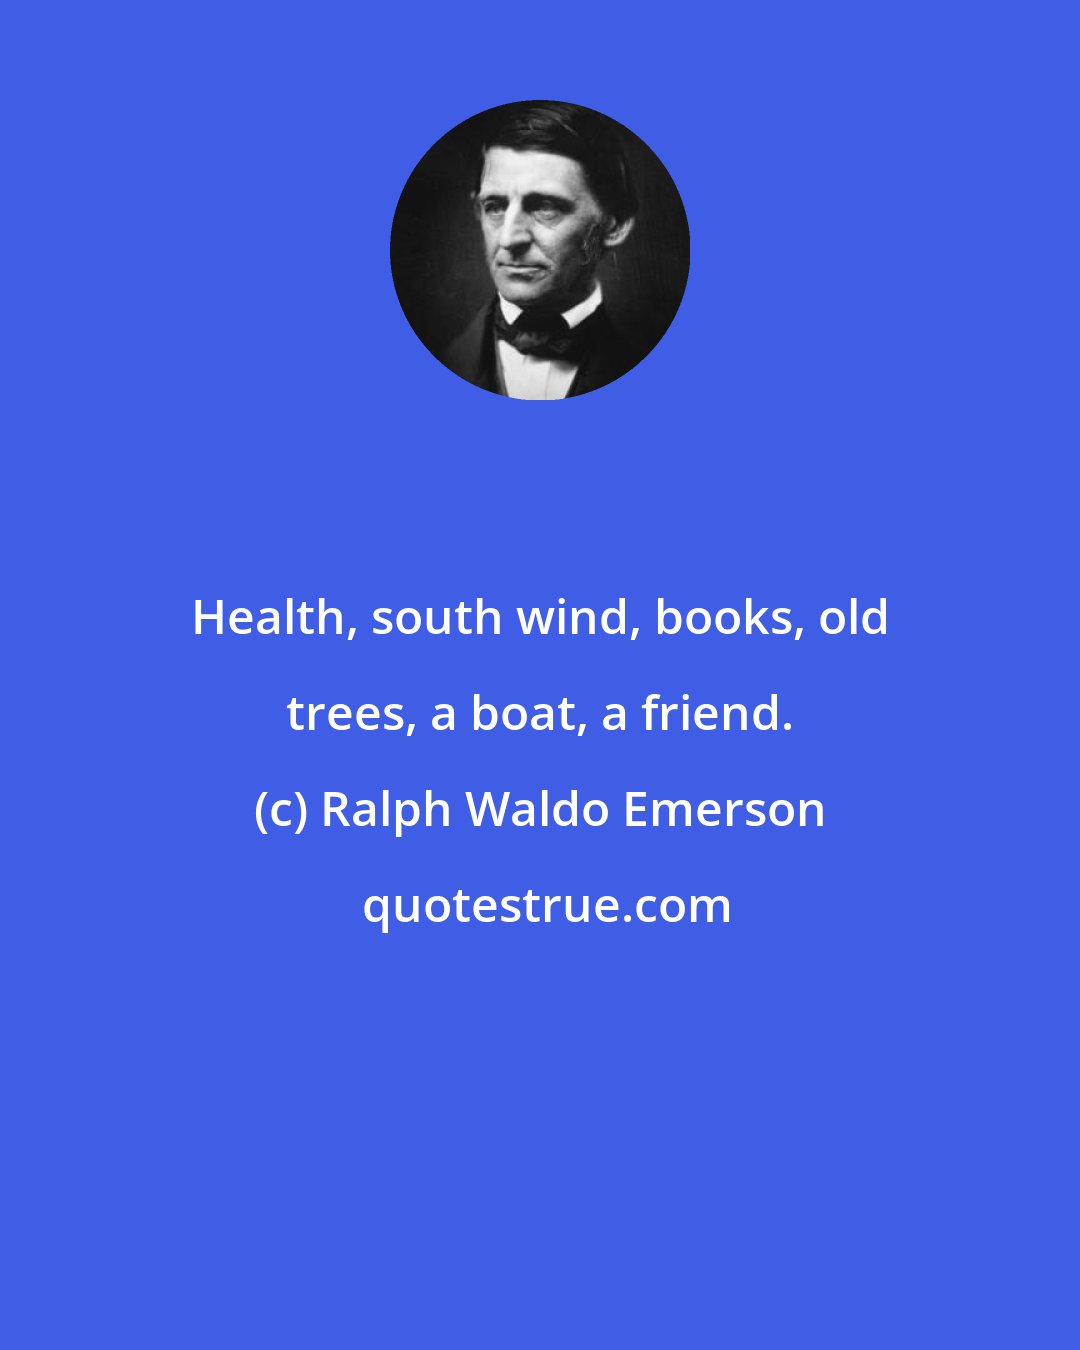 Ralph Waldo Emerson: Health, south wind, books, old trees, a boat, a friend.